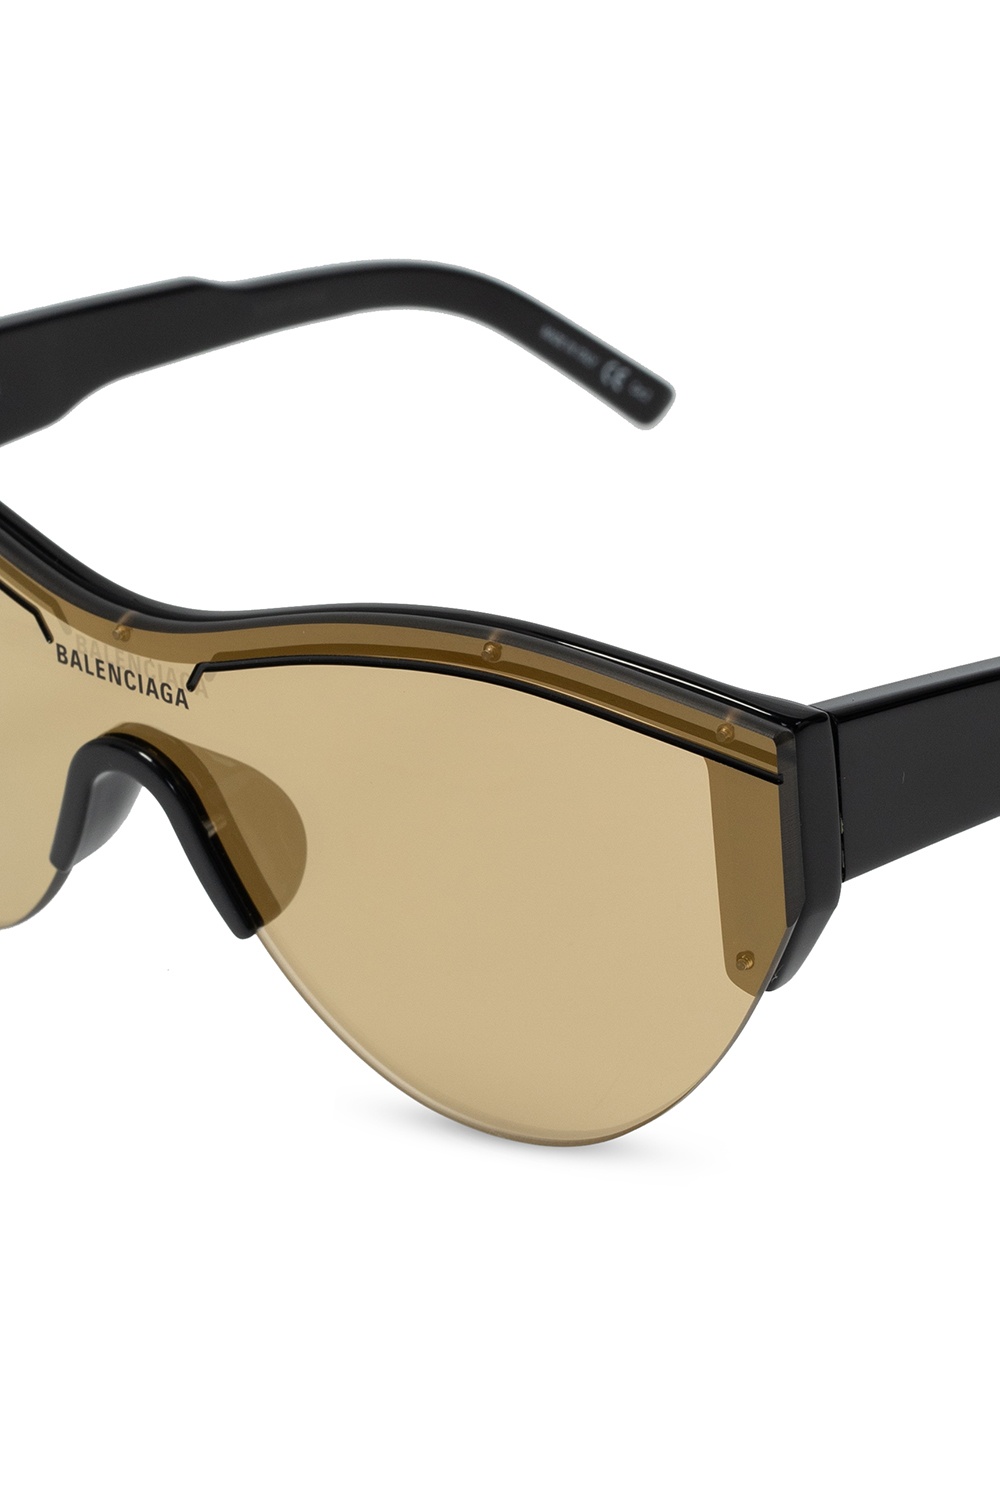 Balenciaga B-II tinted-lens sunglasses